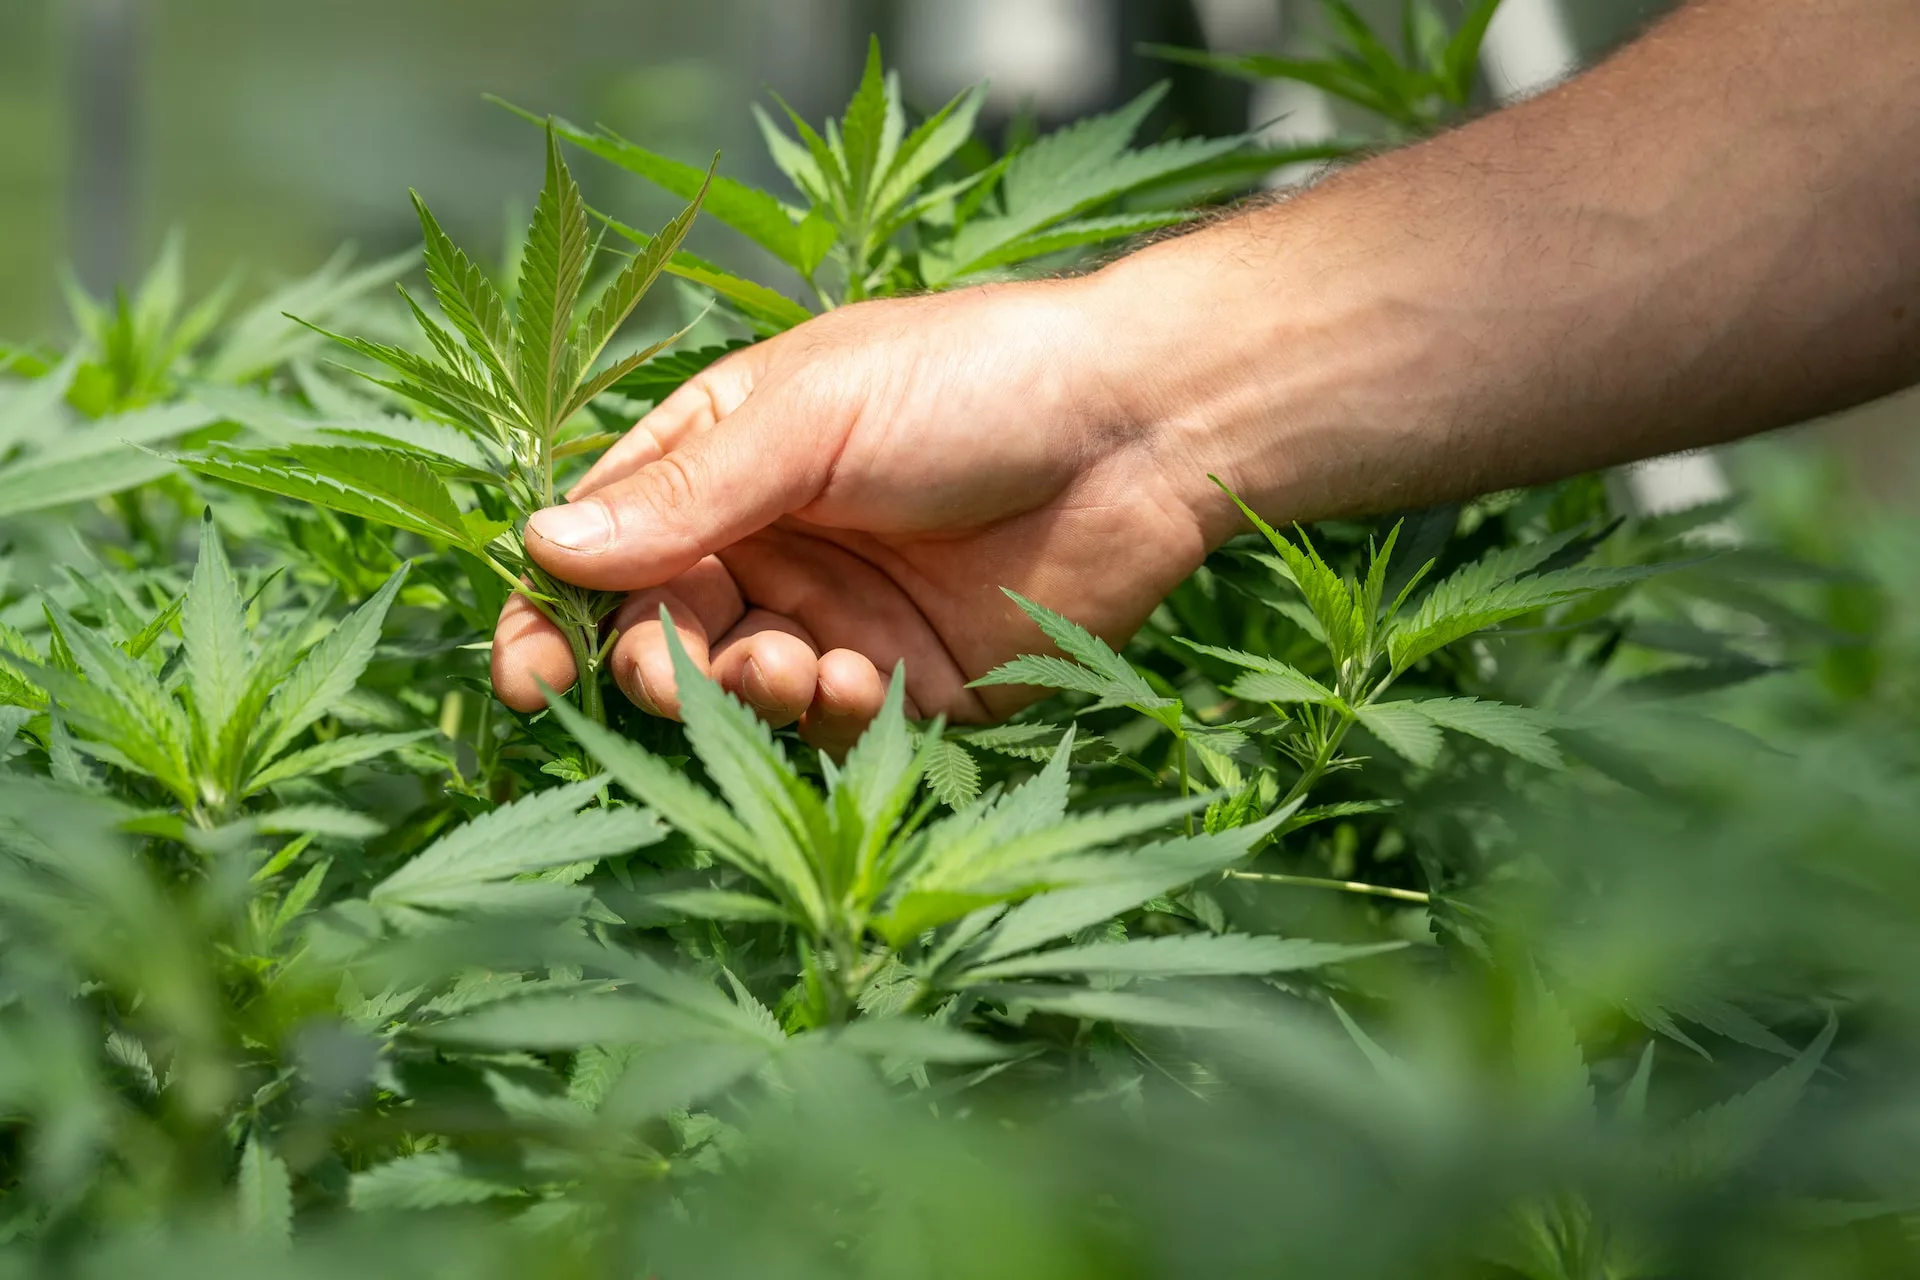 sativa, indica, and hybrid cannabis